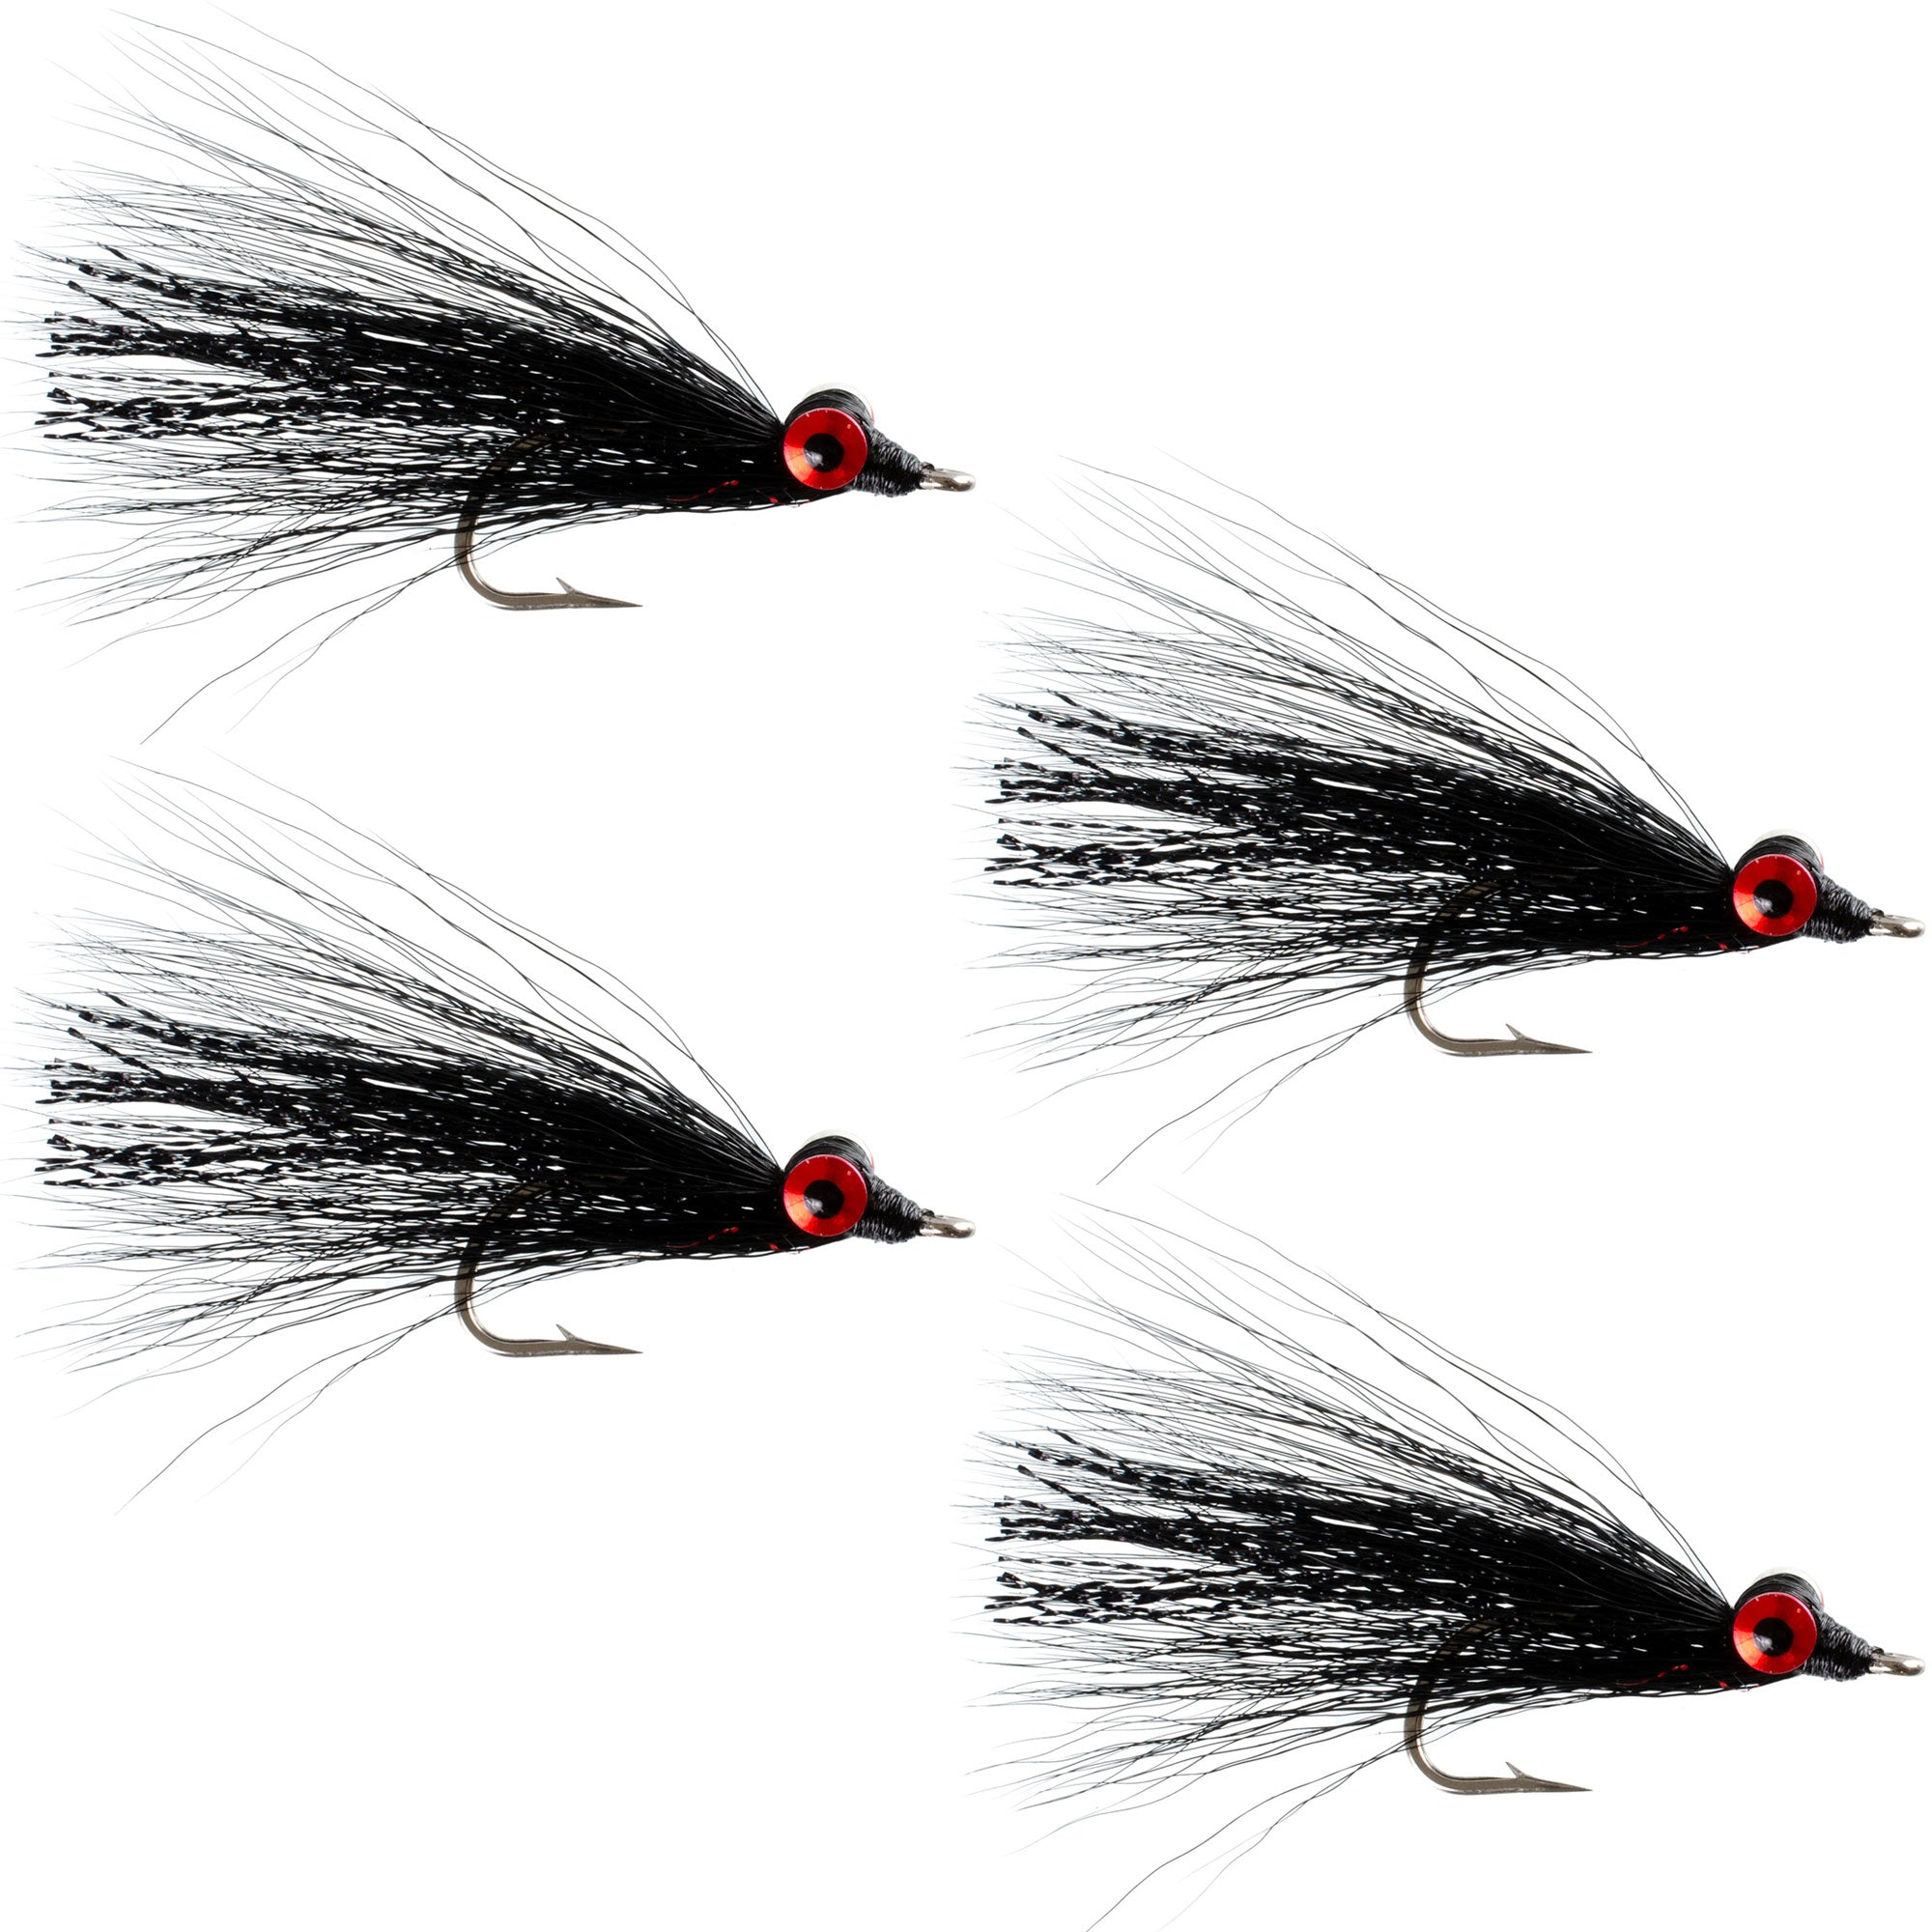 Clousers Deep Minnow Black - Streamer Fly Fishing Flies - 4 Saltwater